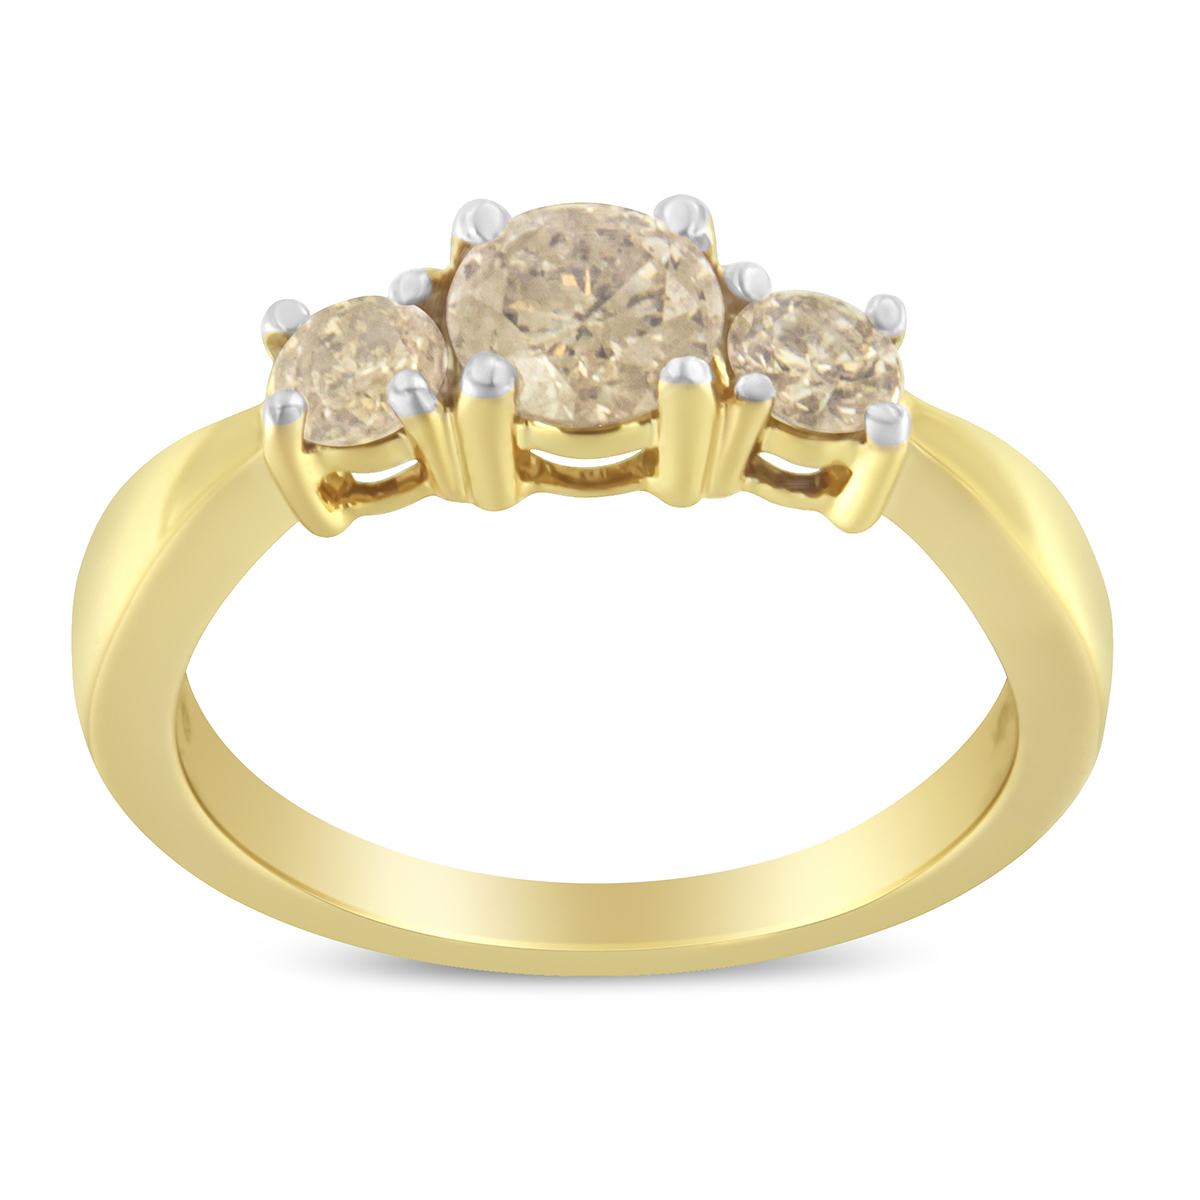 1 Ctw. 3-Stone Diamond Band Ring